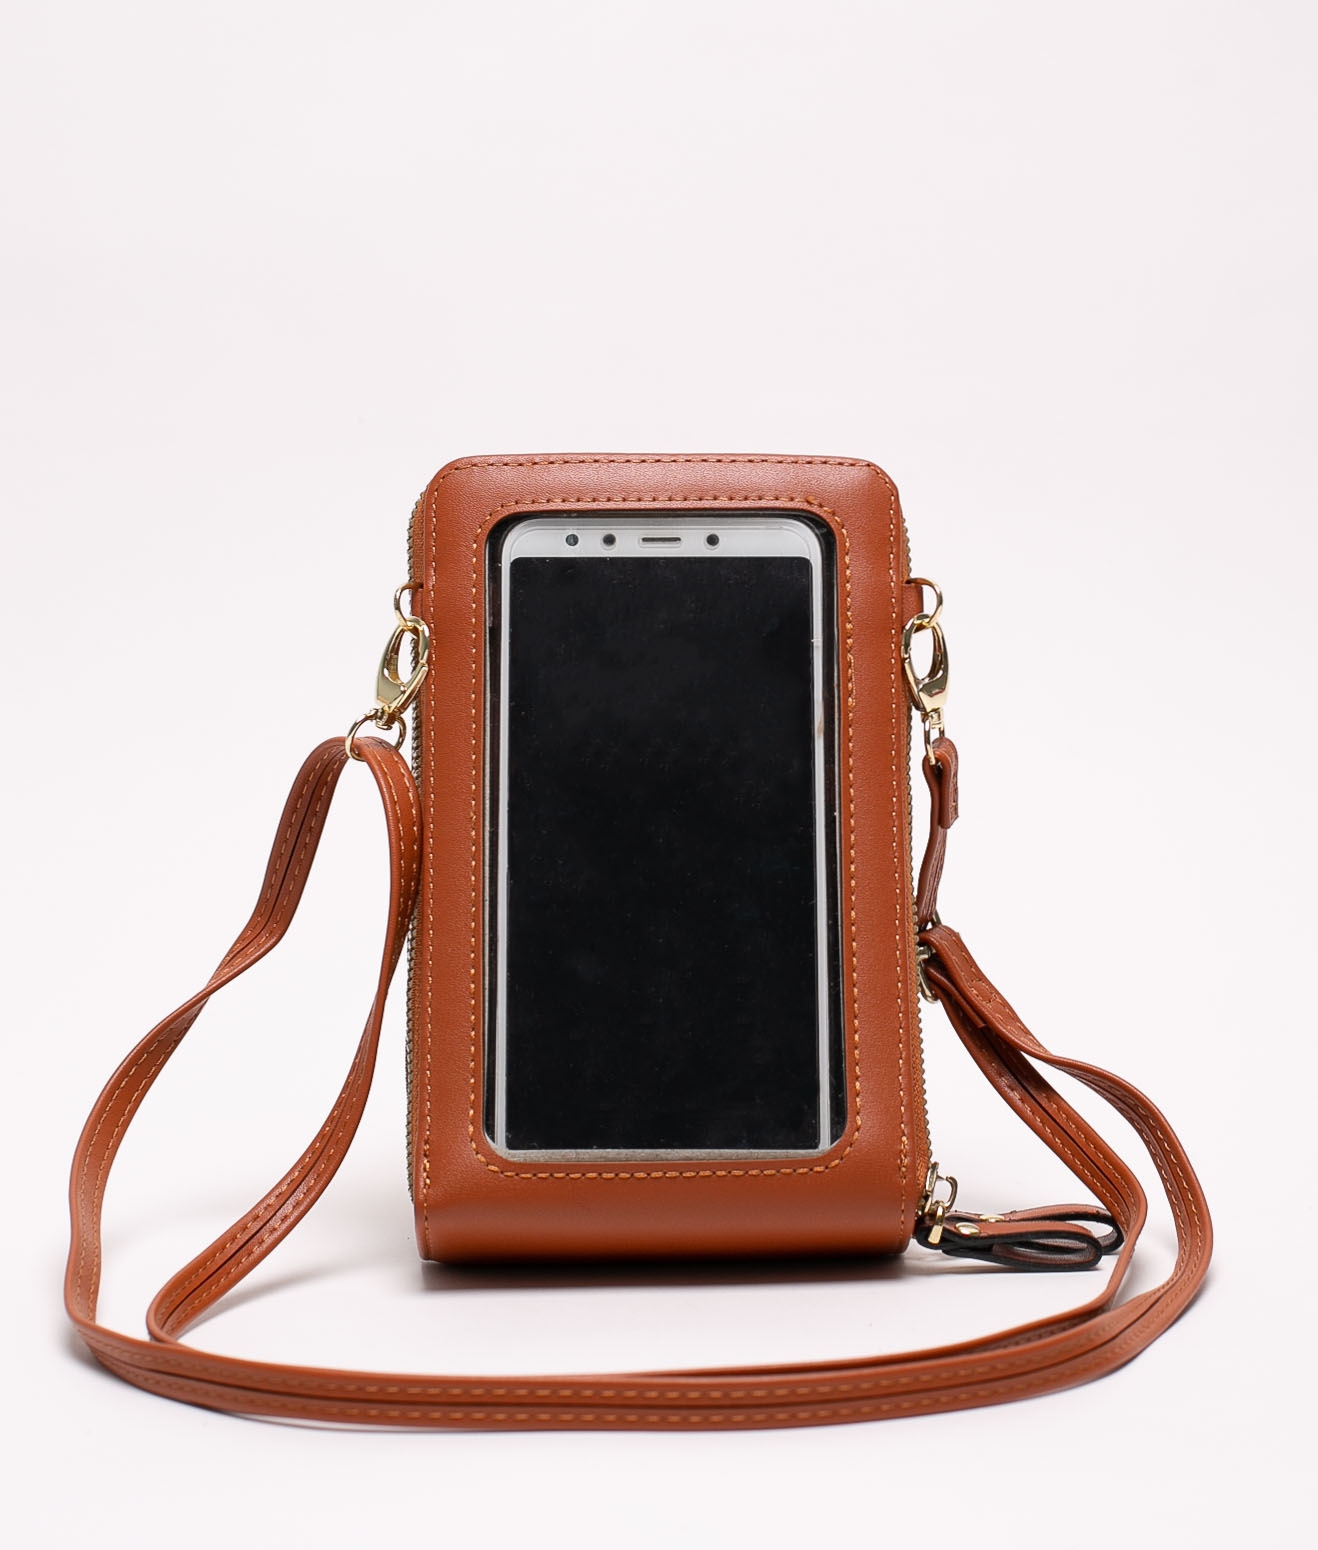 tey phone holder - leather